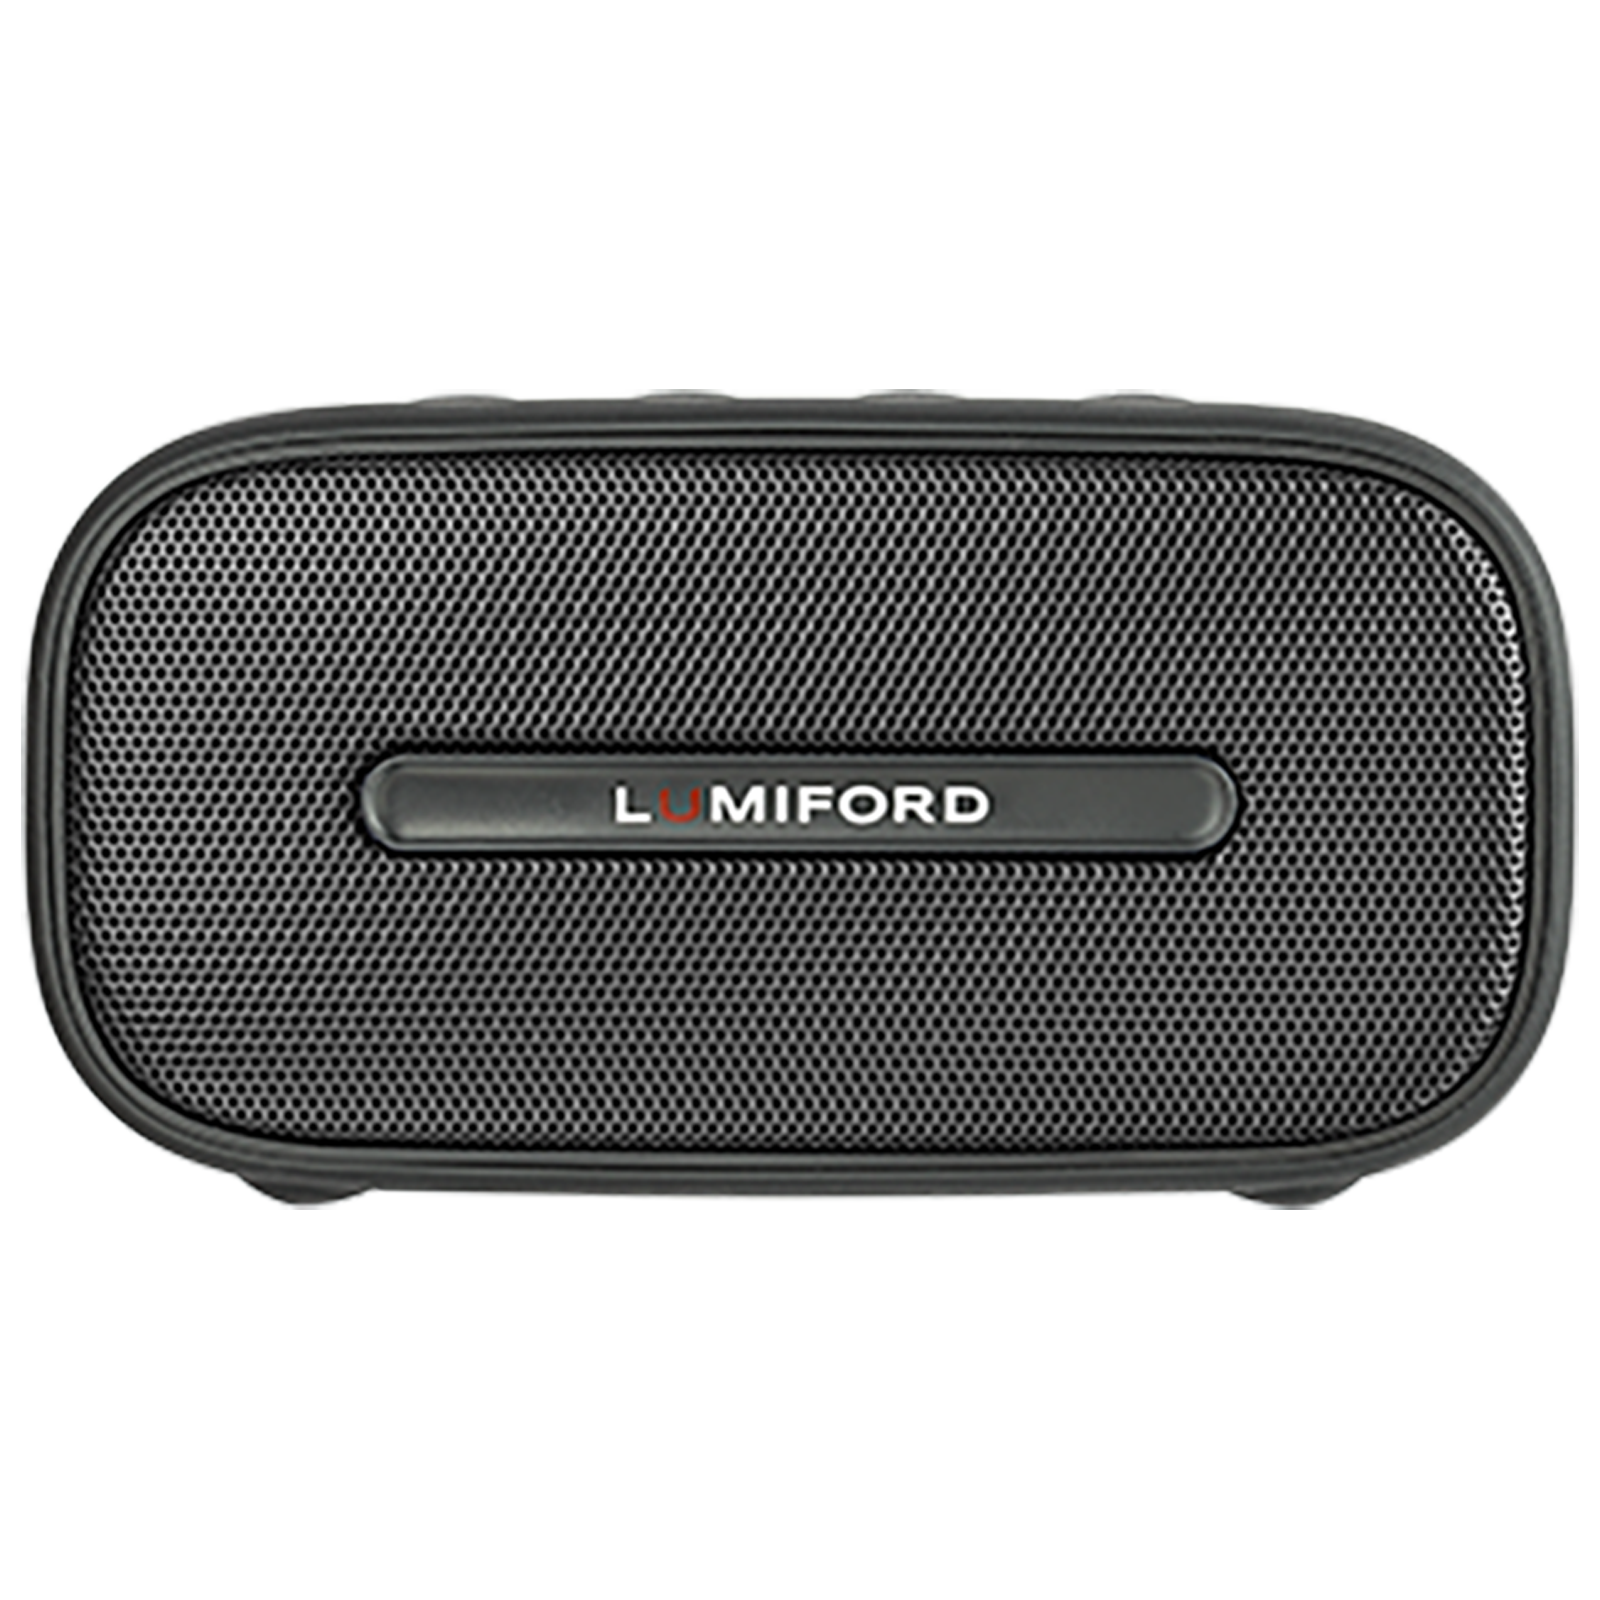 LUMIFORD 5 Watts Portable Speaker (In-Built Hd Microphone, LFBT13BLACK, Black)_1